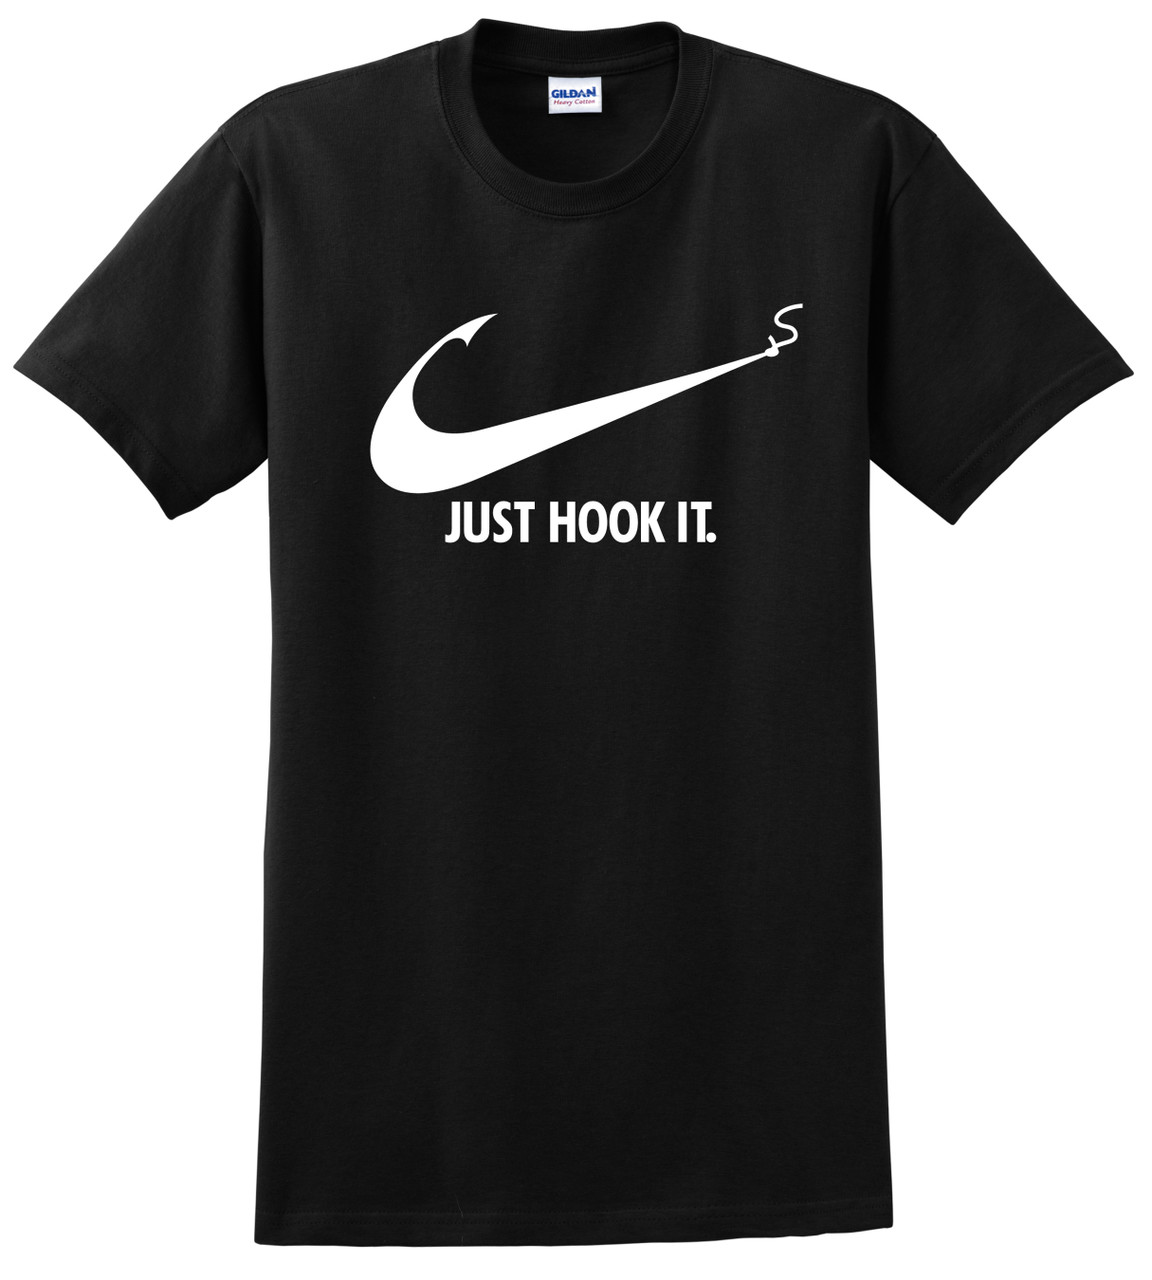 Nike Slogan t-shirt,Just Hook It ADULT funny T-shirt,Meme Swoosh Sports  Men's